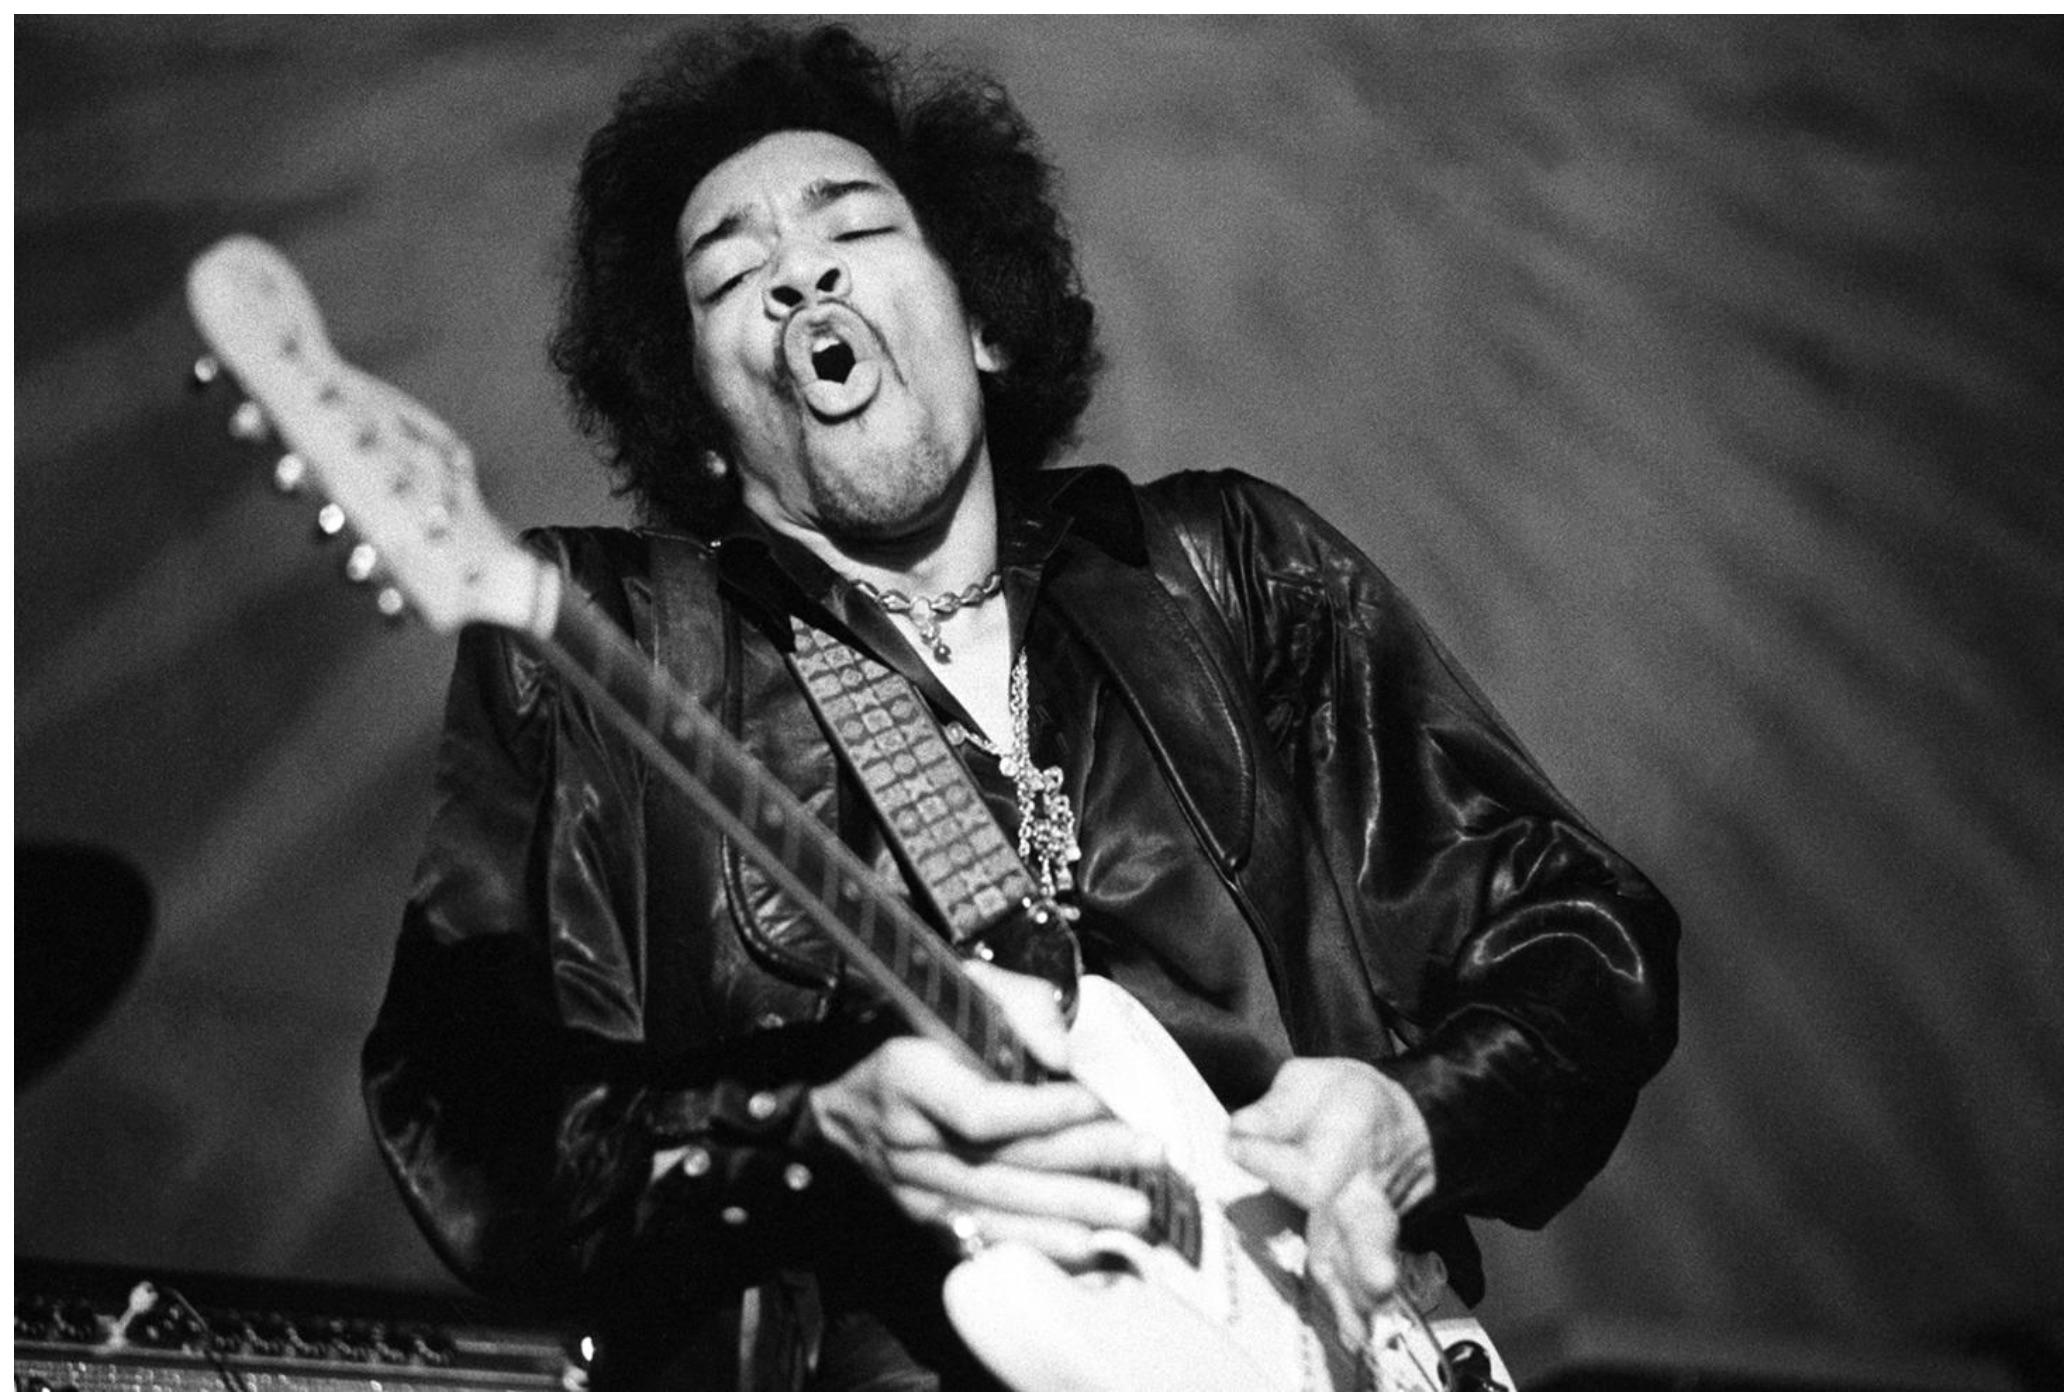 Baron Wolman Black and White Photograph - Jimi Hendrix 